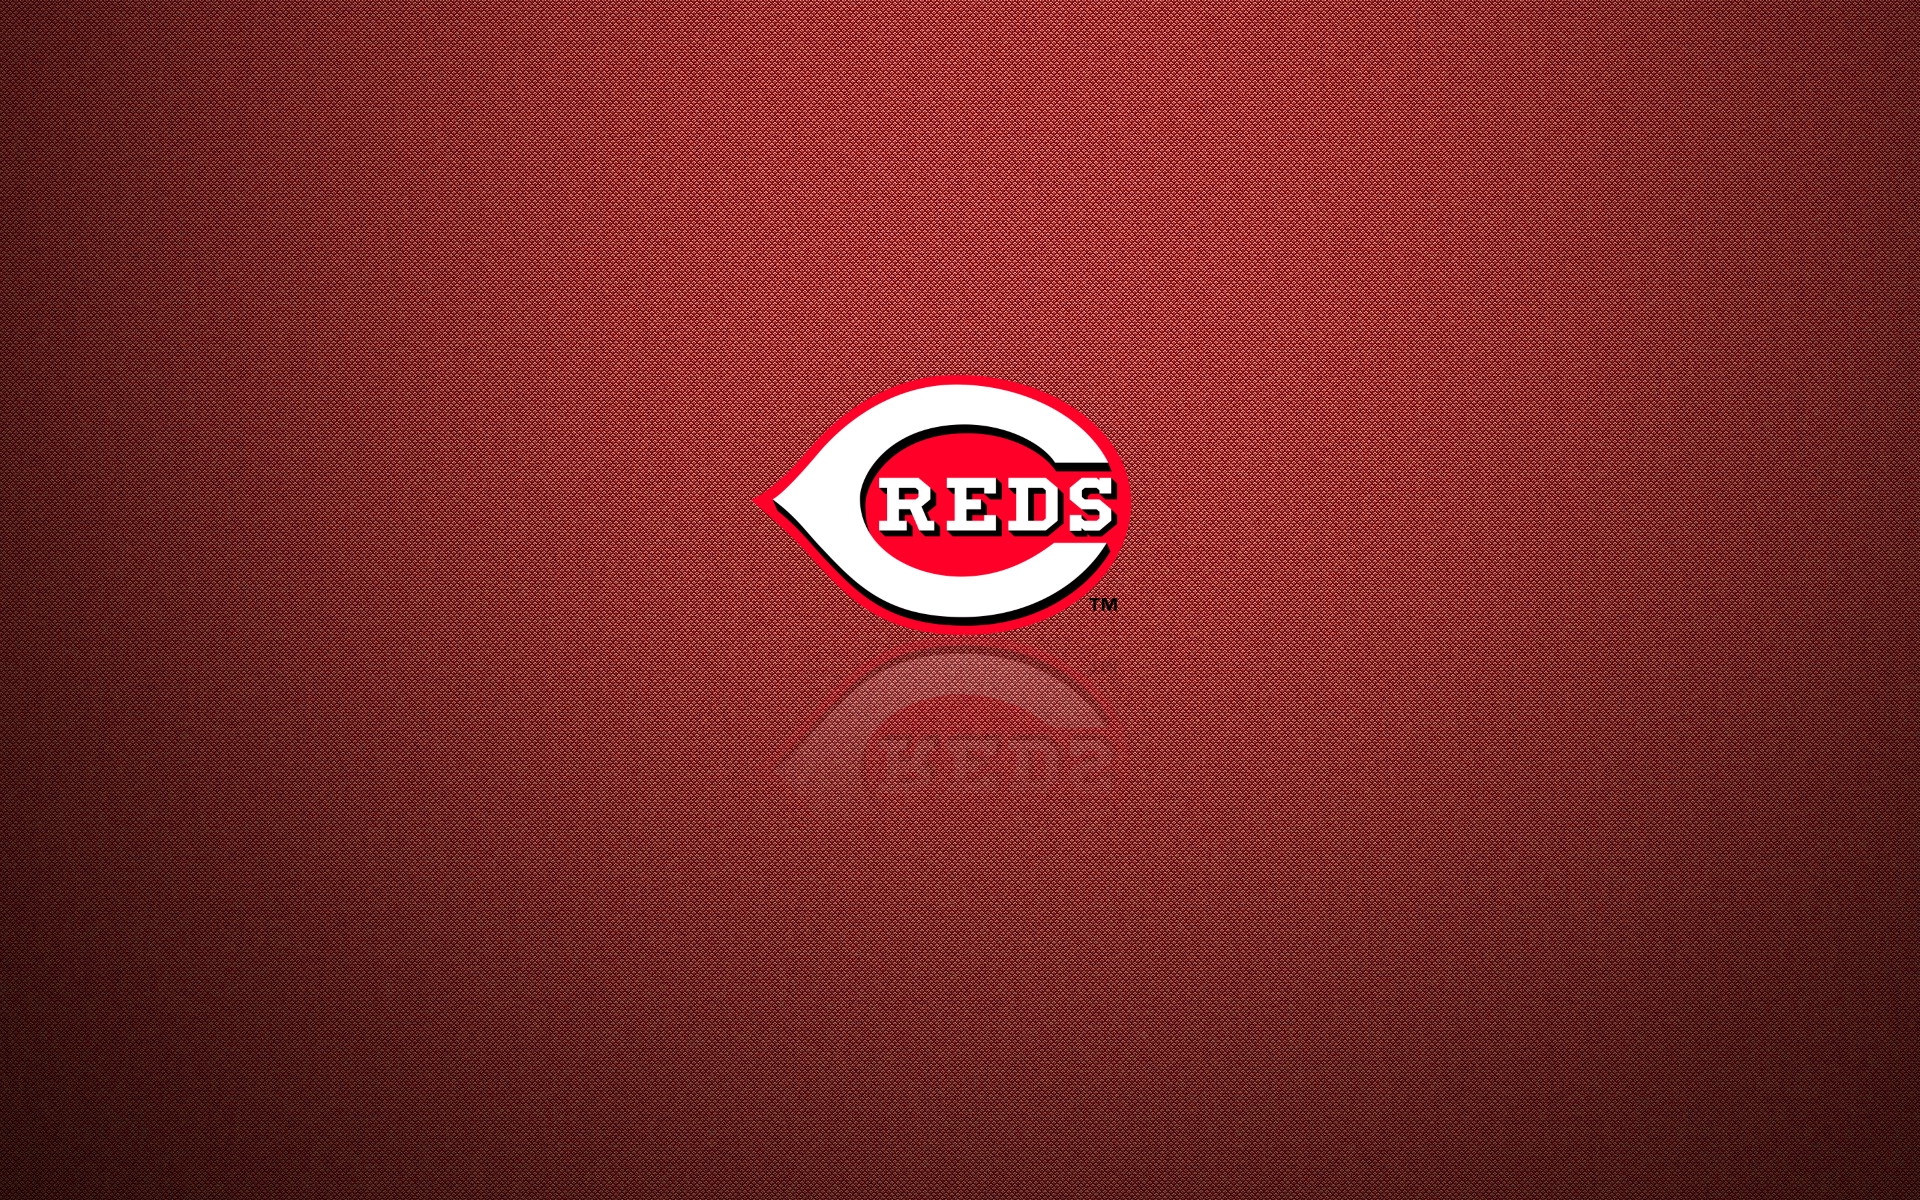 Cincinnati Reds Hd Wallpaper Background Image 19x10 Id 9643 Wallpaper Abyss